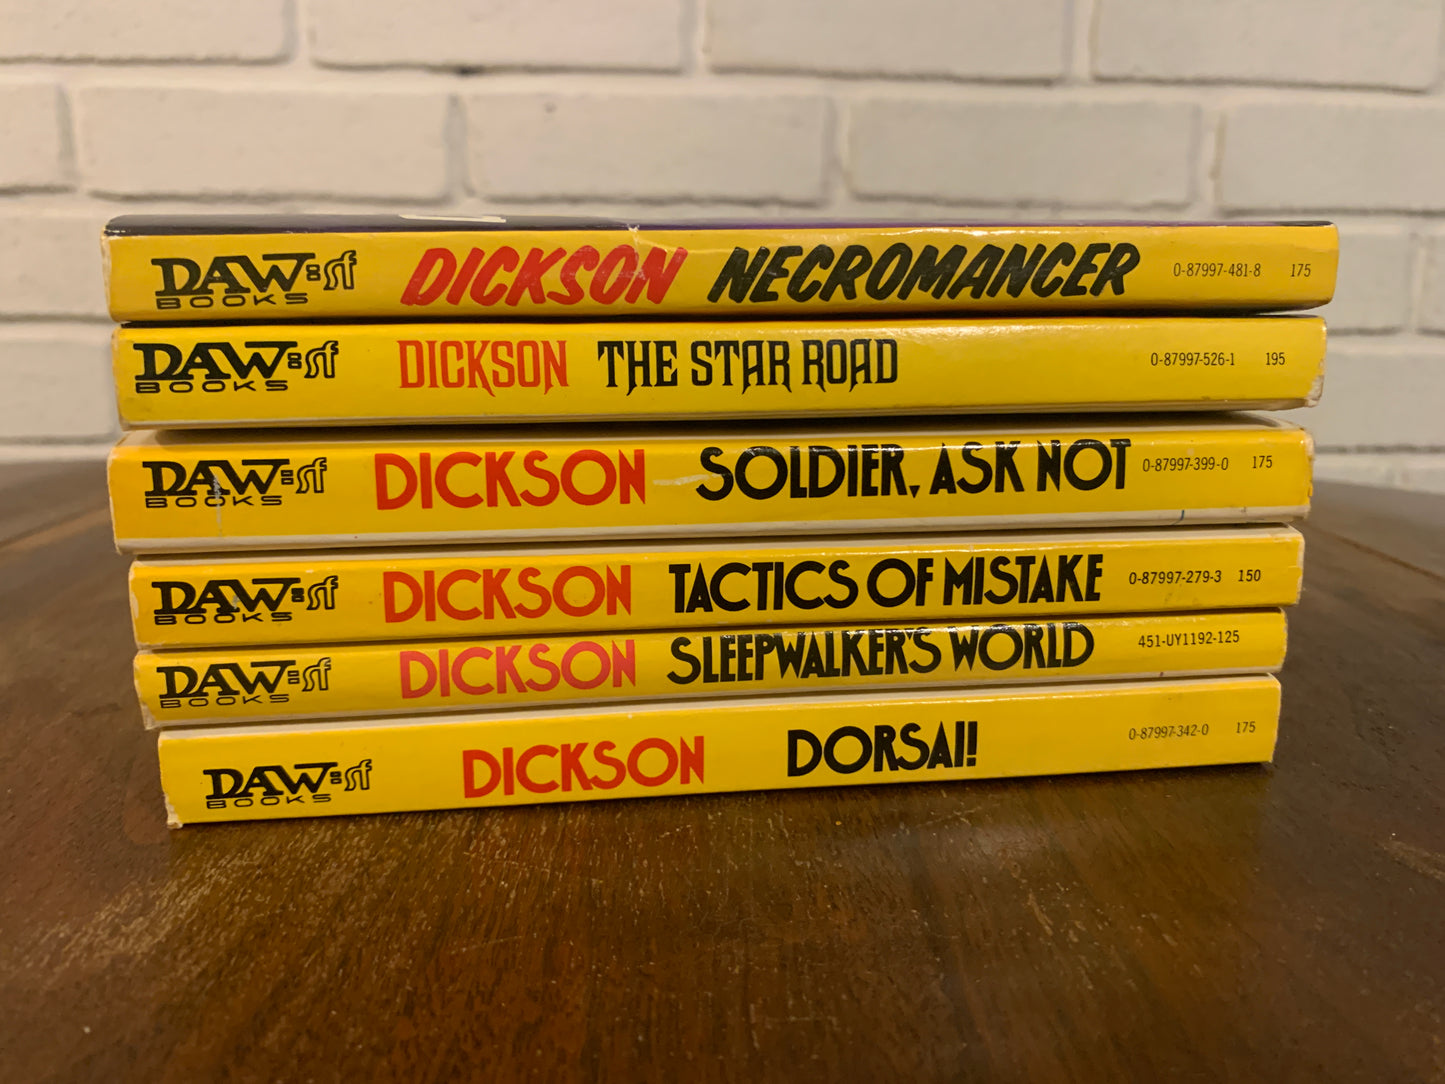 Gordon R. Dickson Lot of 6 Daw Books